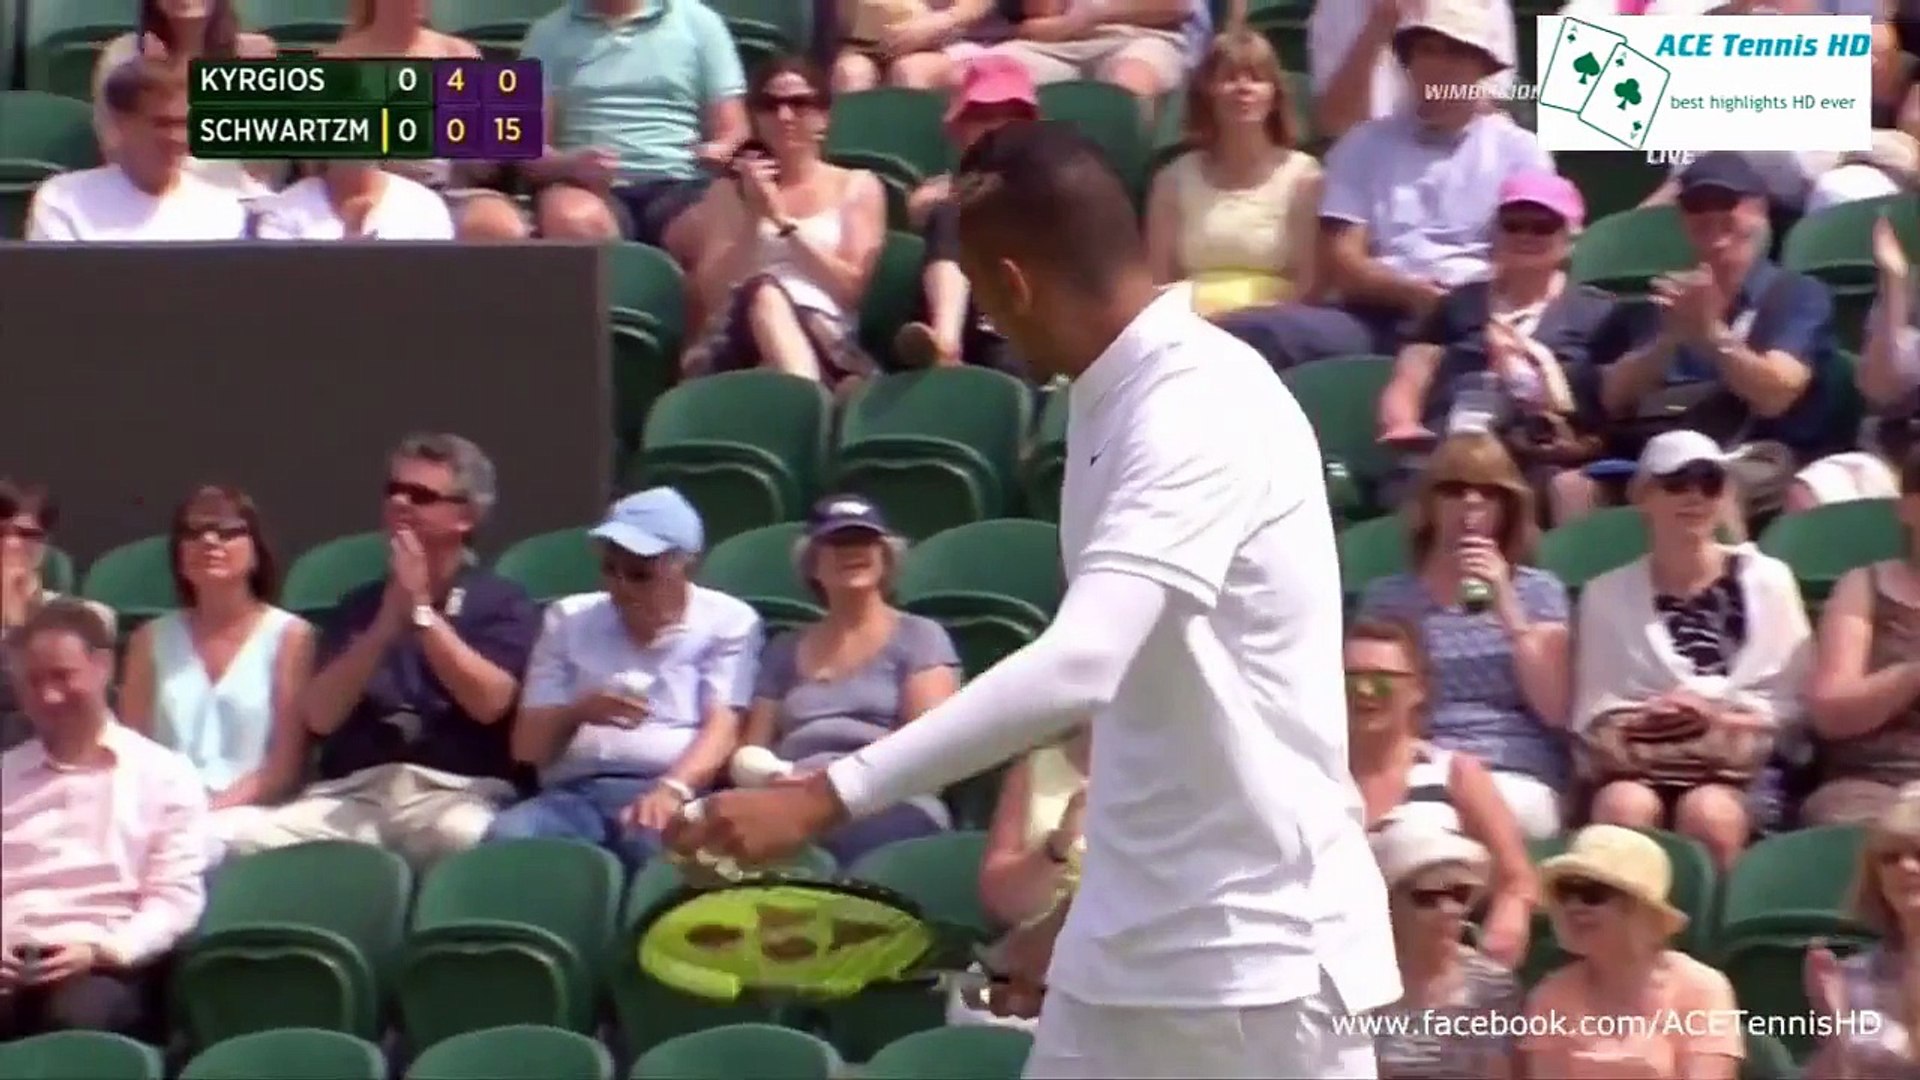 Nick Kyrgios vs Schwartzman - Highlights Wimbledon 2015 (HD720p 50fps) by ACE  Tennis HD - video Dailymotion